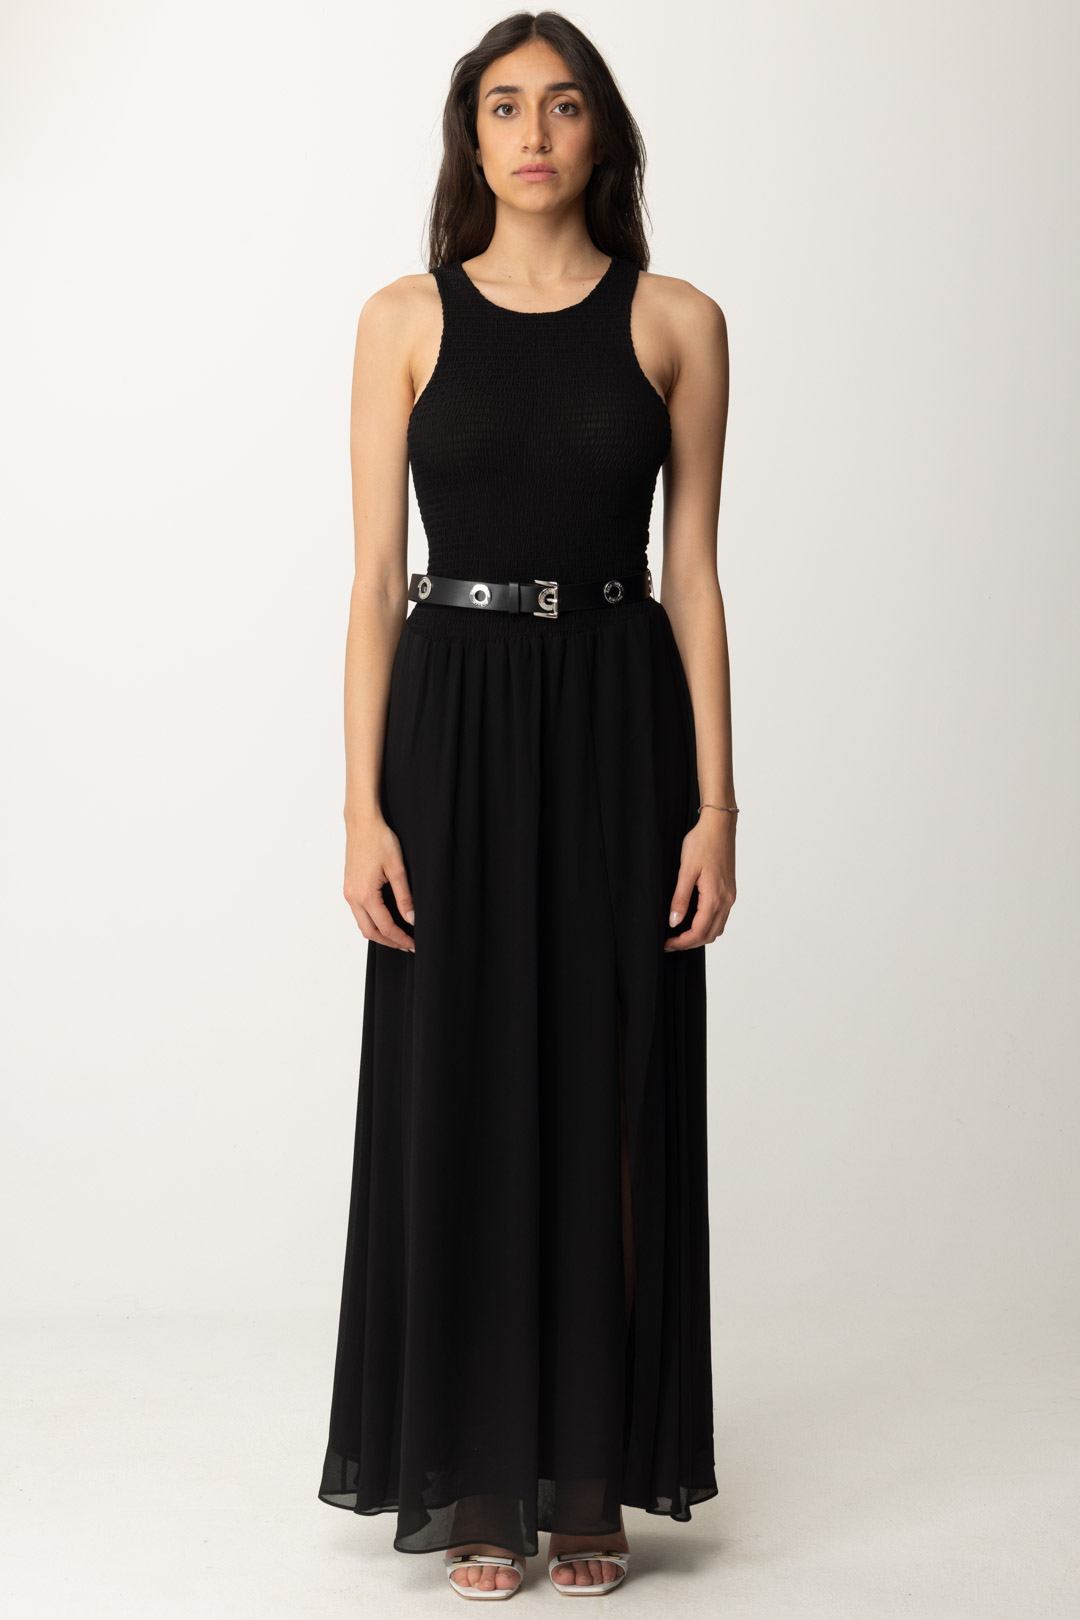 Vorschau: Michael Kors Langes Kleid mit Gürtel Black